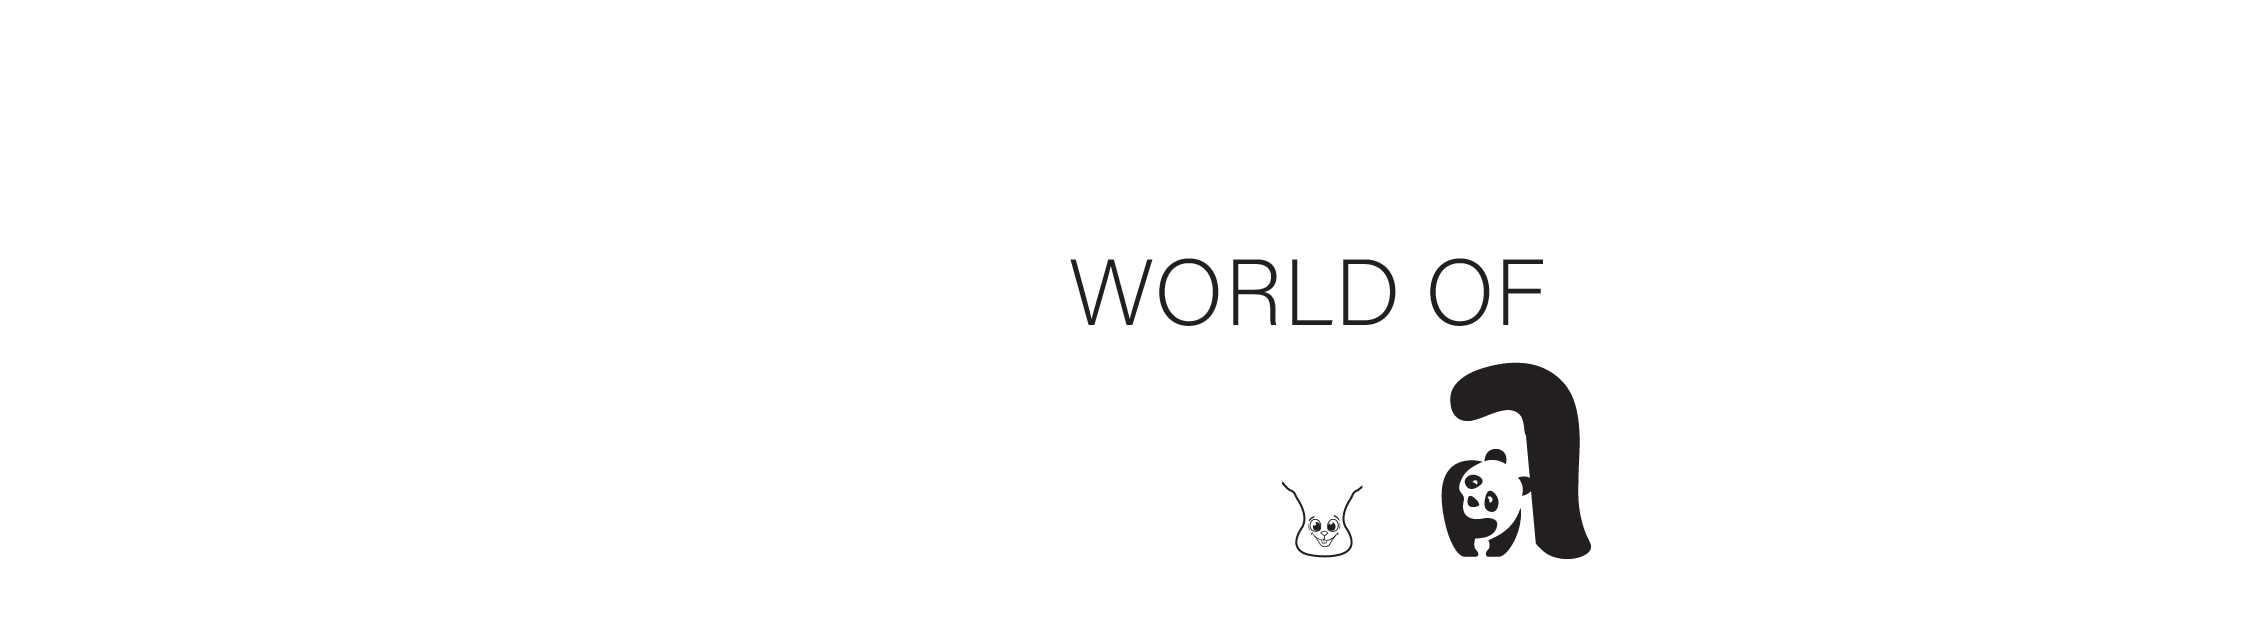 World of animals png logo